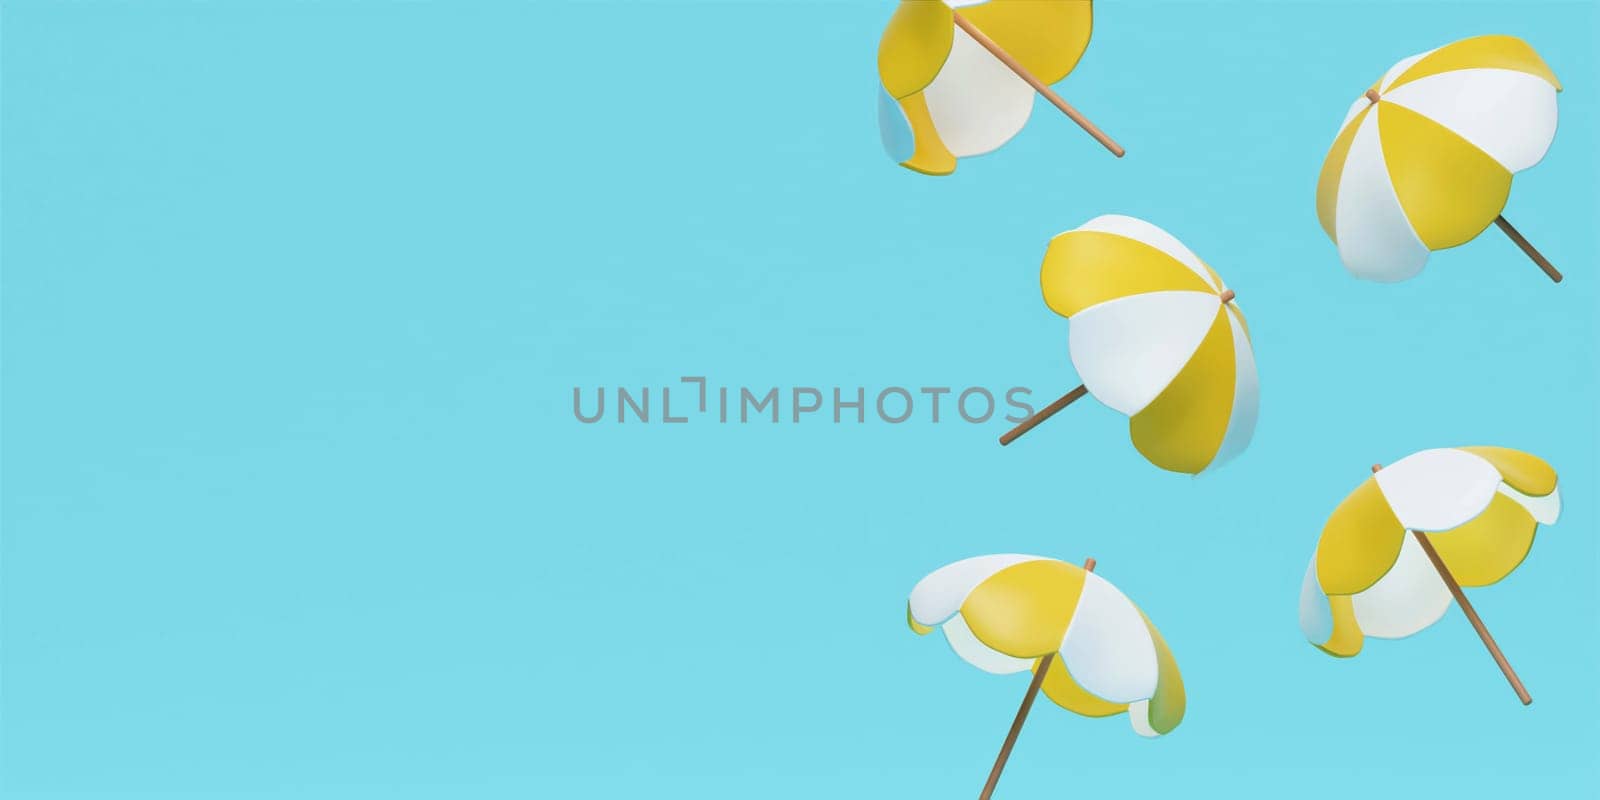 float yellow umbrella isolate on pastel blue background, summer concept, concept of summer. 3 illustration banner. 3d rendering illustration.